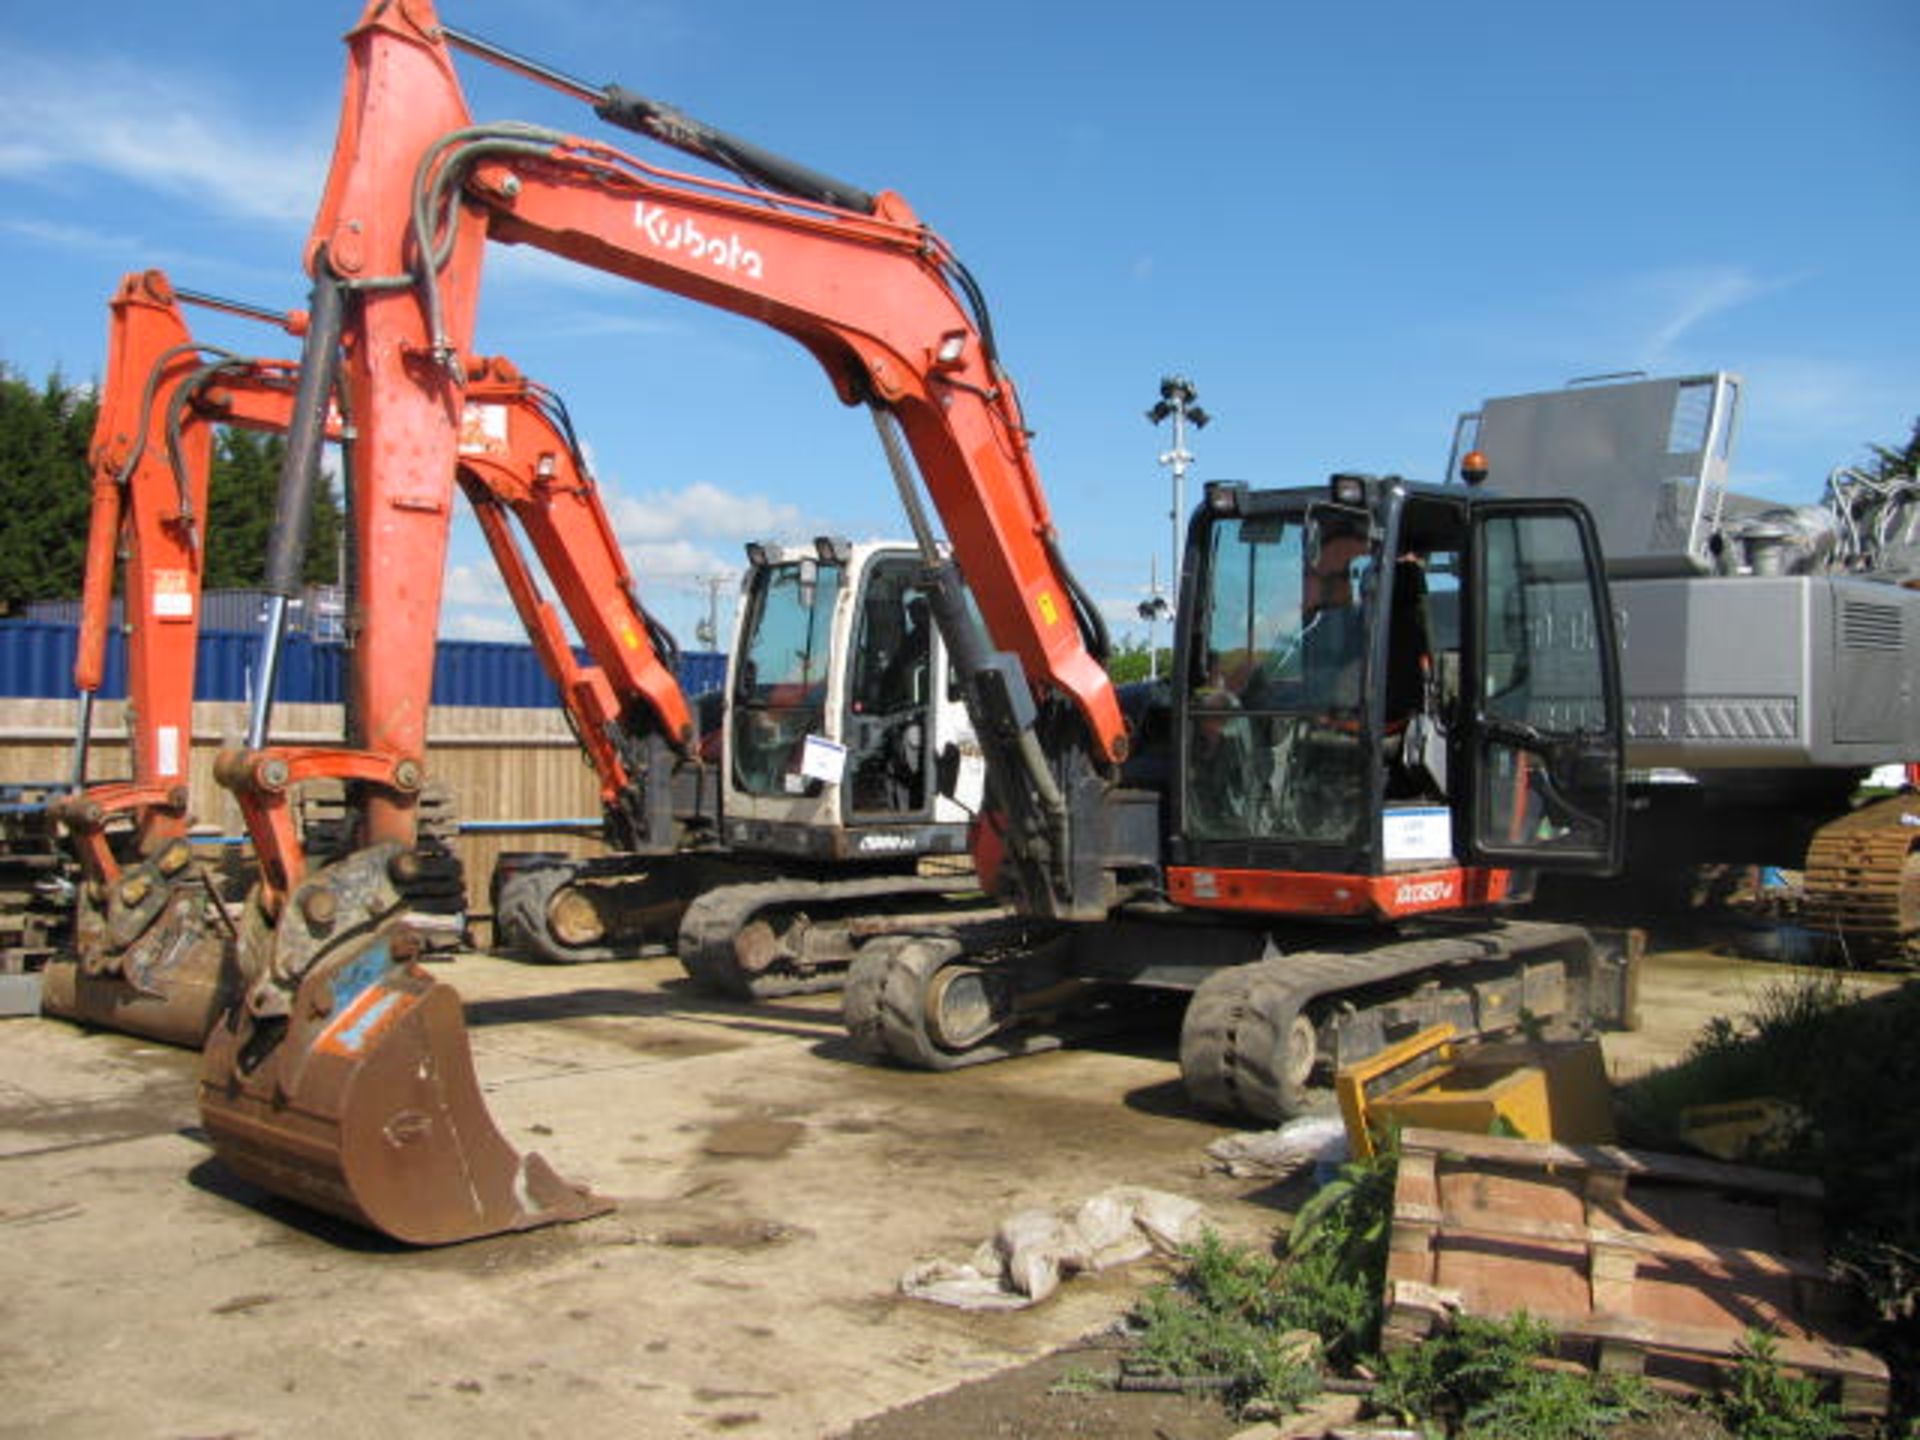 Kubota KX080-4 rubber tracked excavator